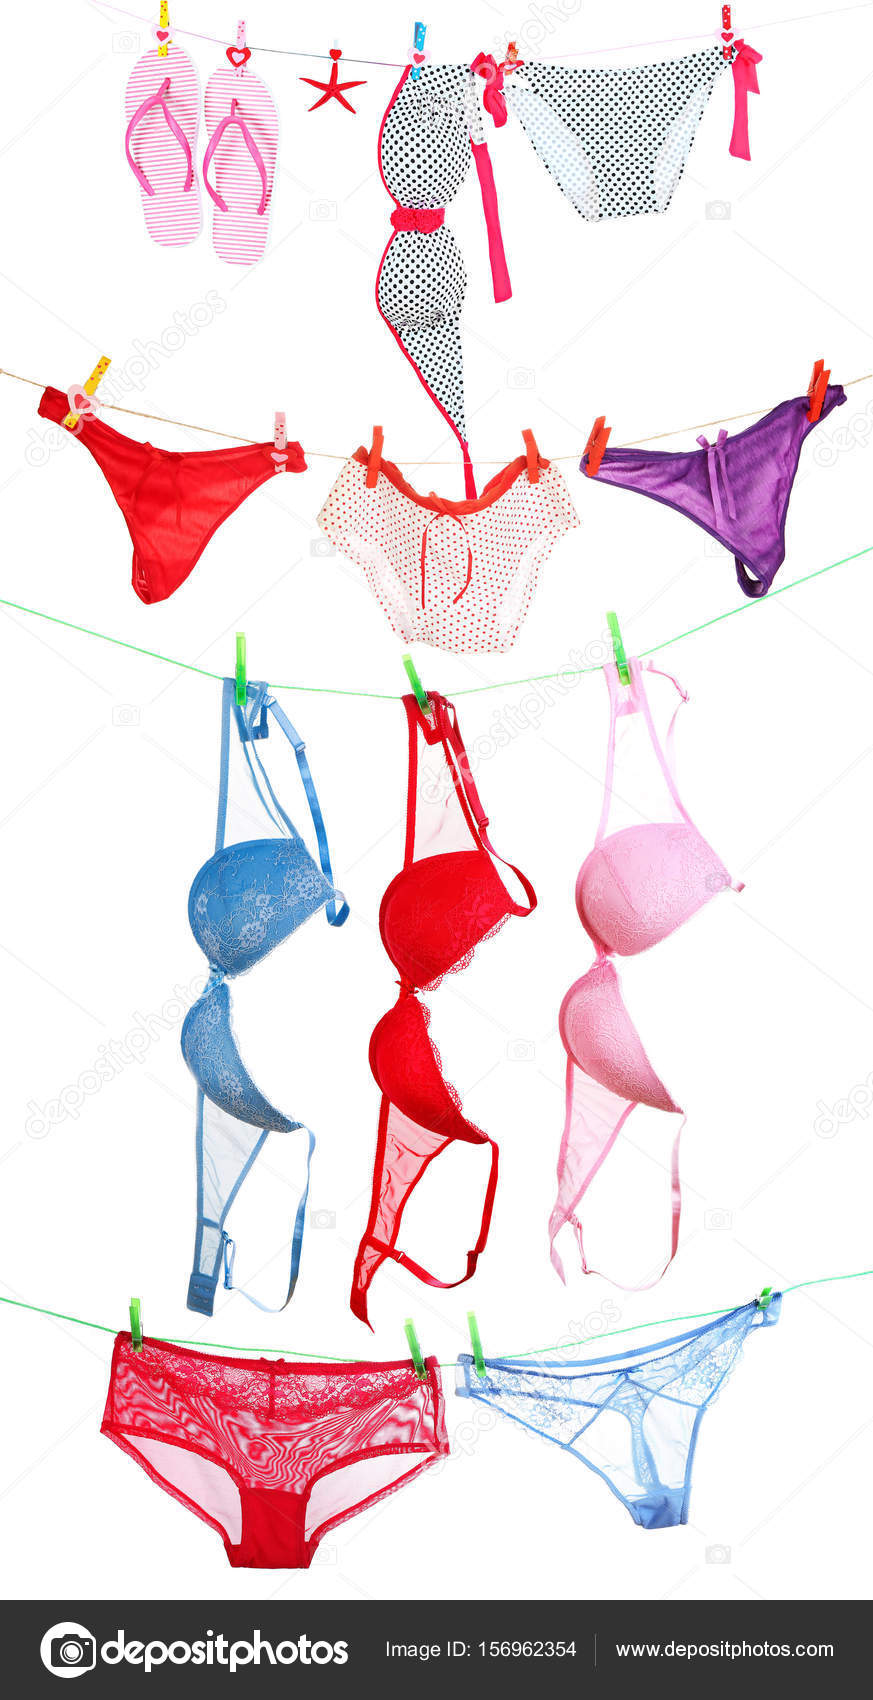 https://st3.depositphotos.com/1177973/15696/i/1600/depositphotos_156962354-stock-illustration-women-underwear-hanging-from-clotheslines.jpg